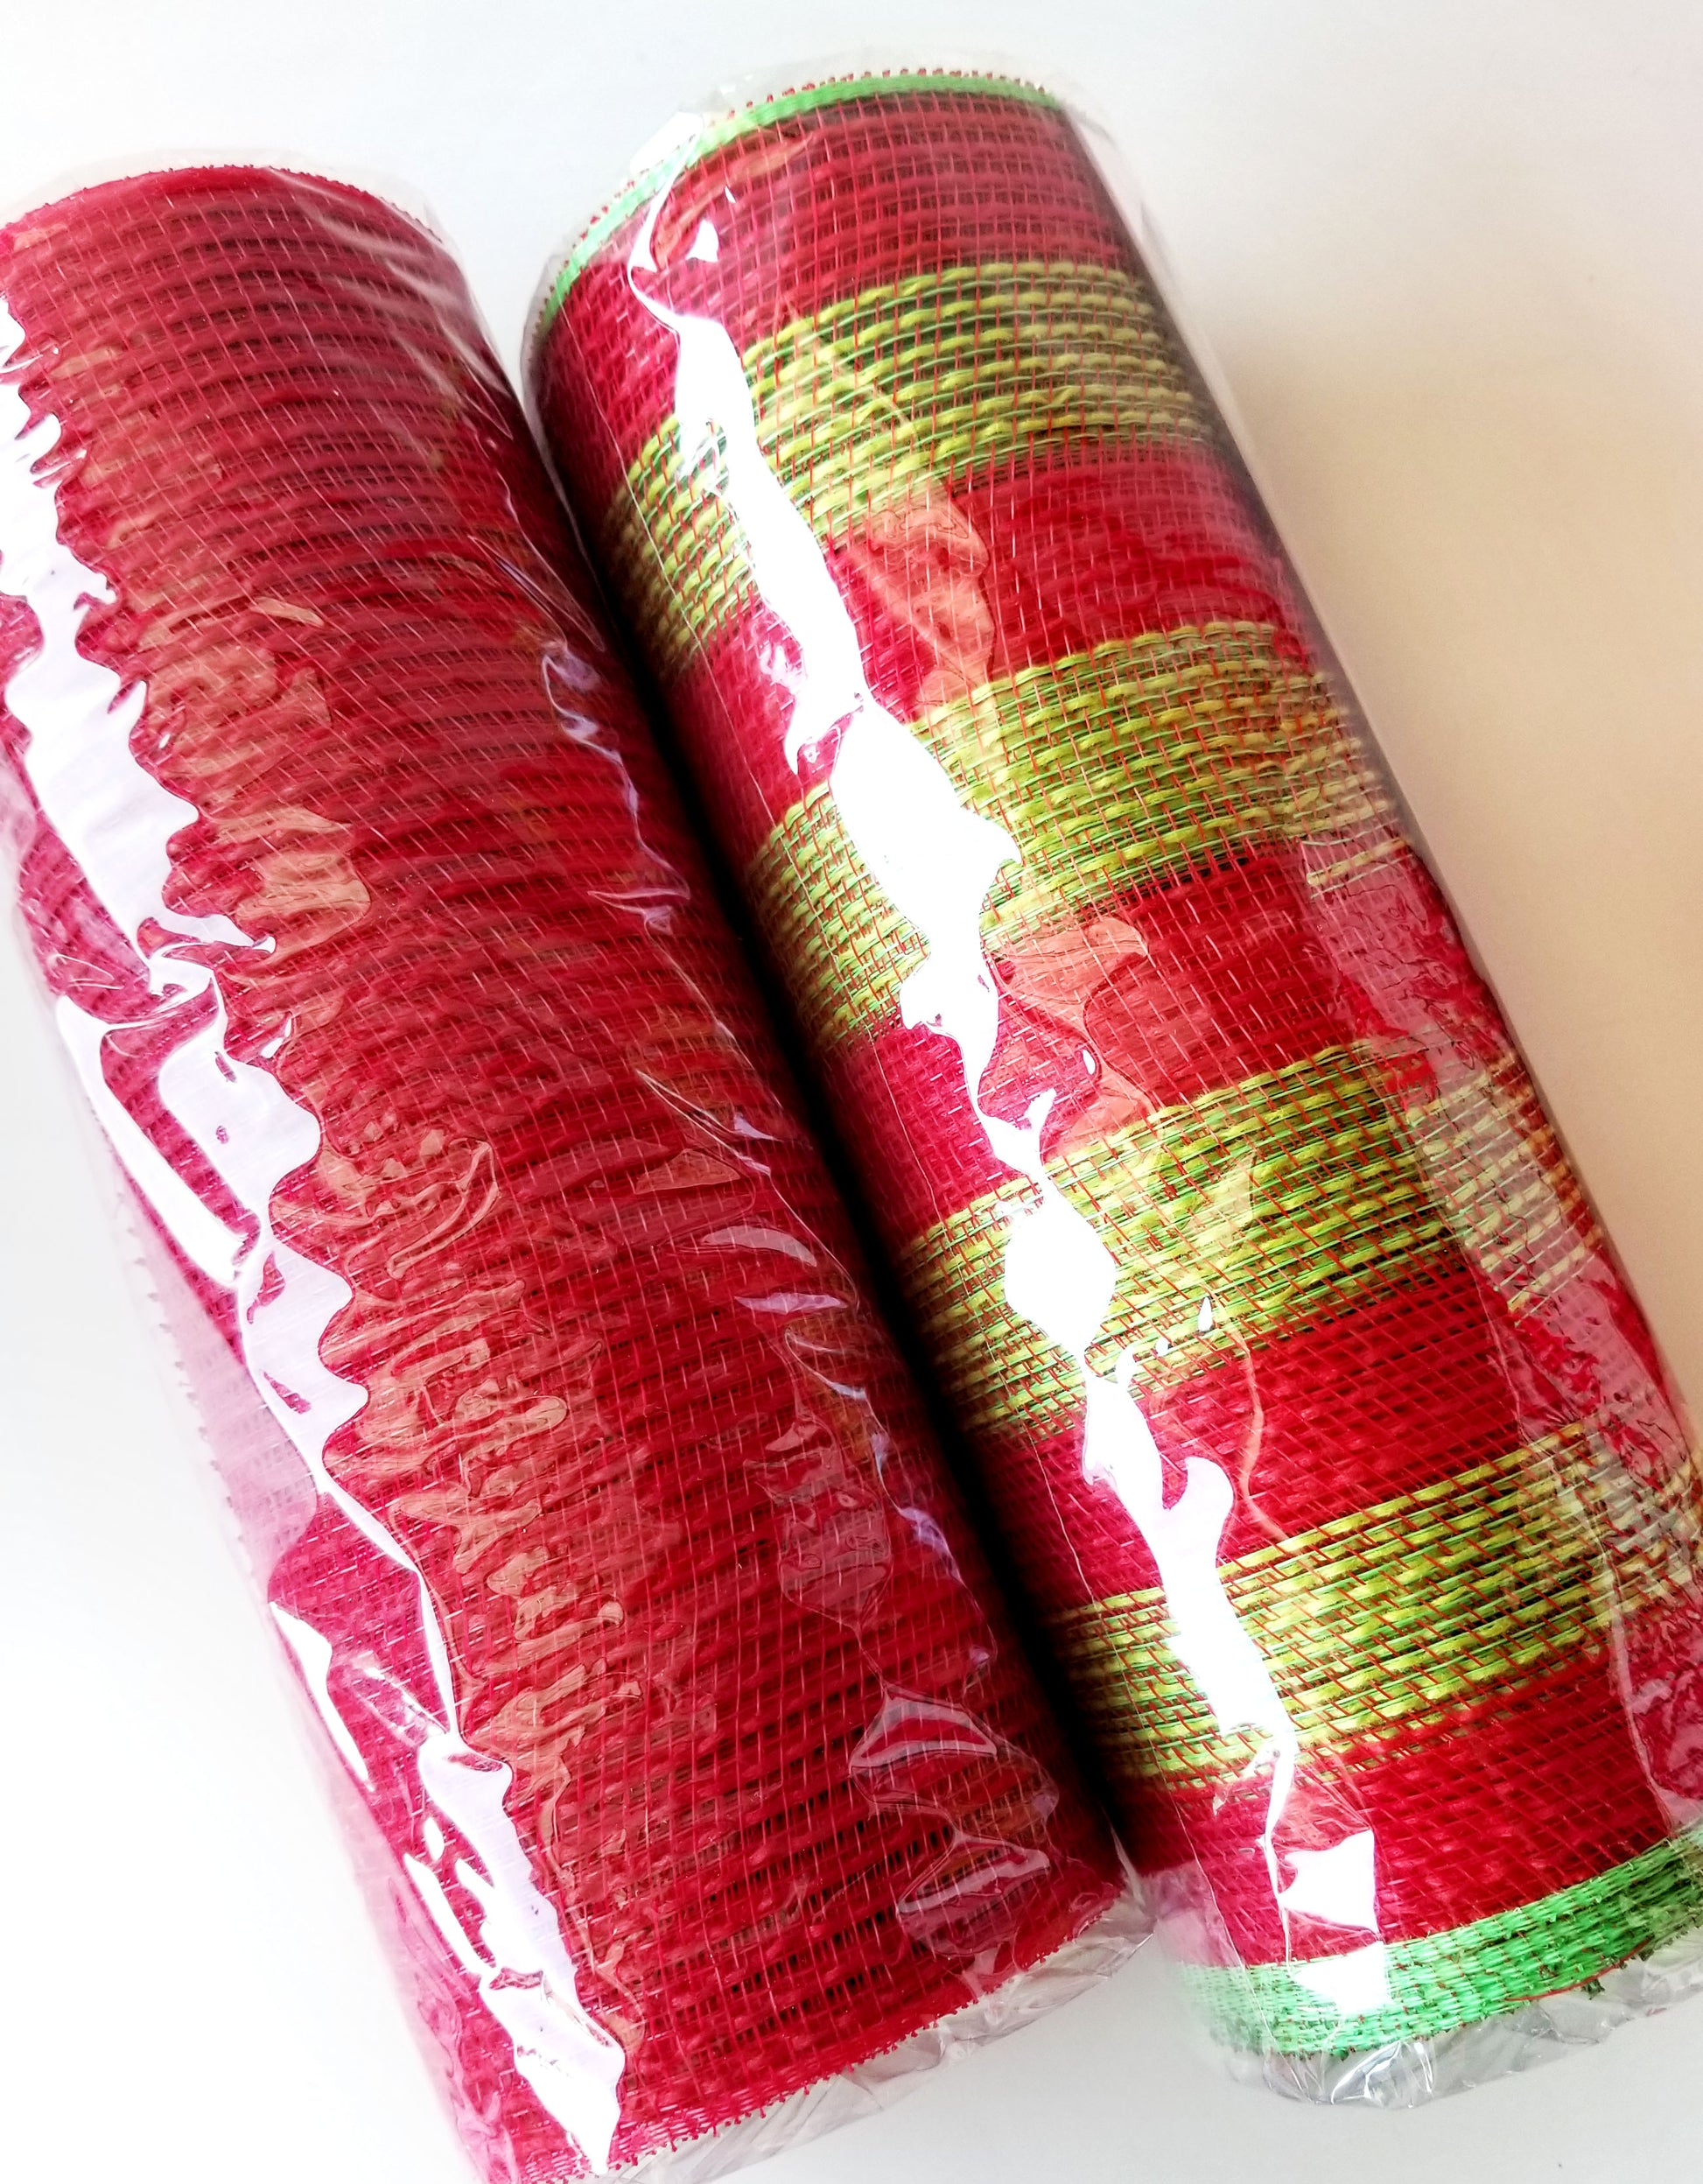 Merry Christmas Wreath Making Kit | Red & Lime - Designer DIY